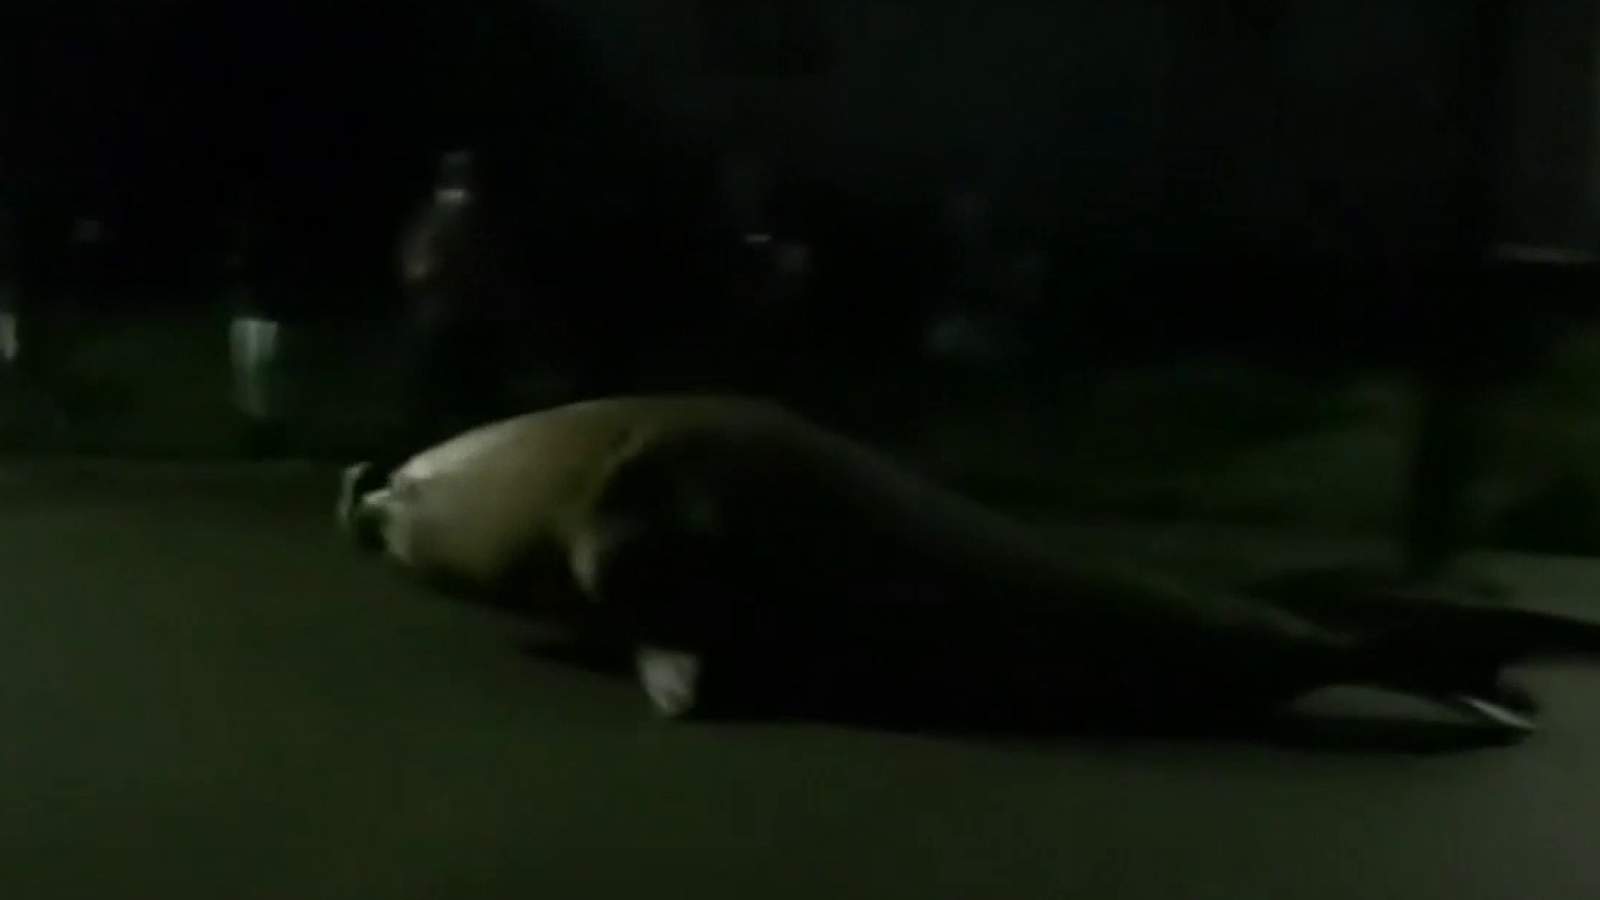 Video: Massive elephant seal squiggles through neighborhood